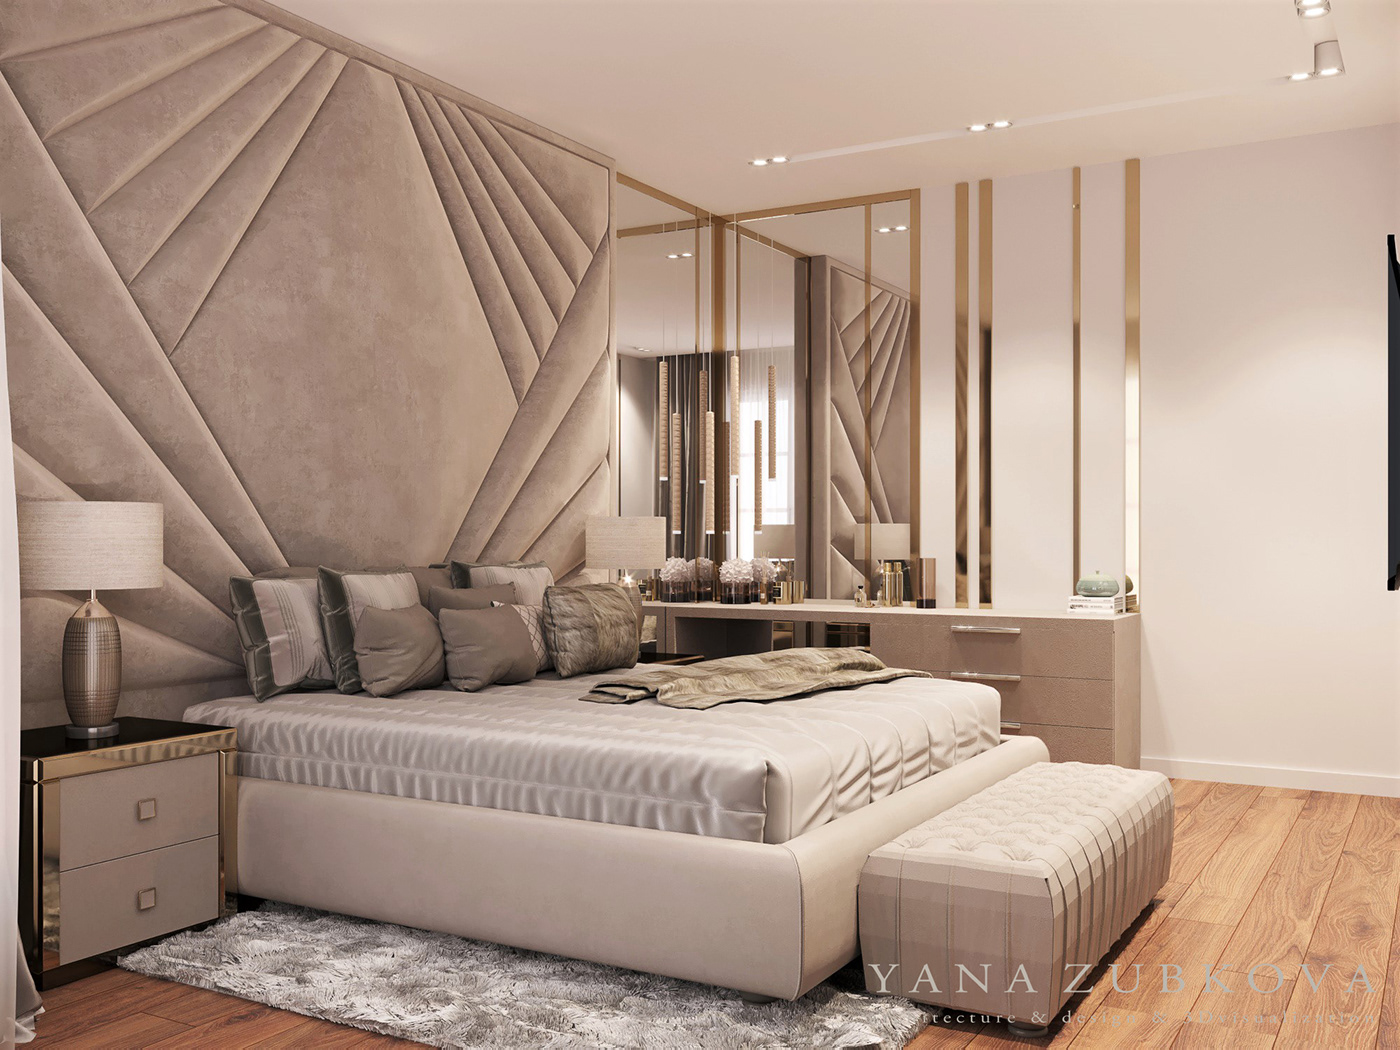 bedroom DESIGN interior on Behance